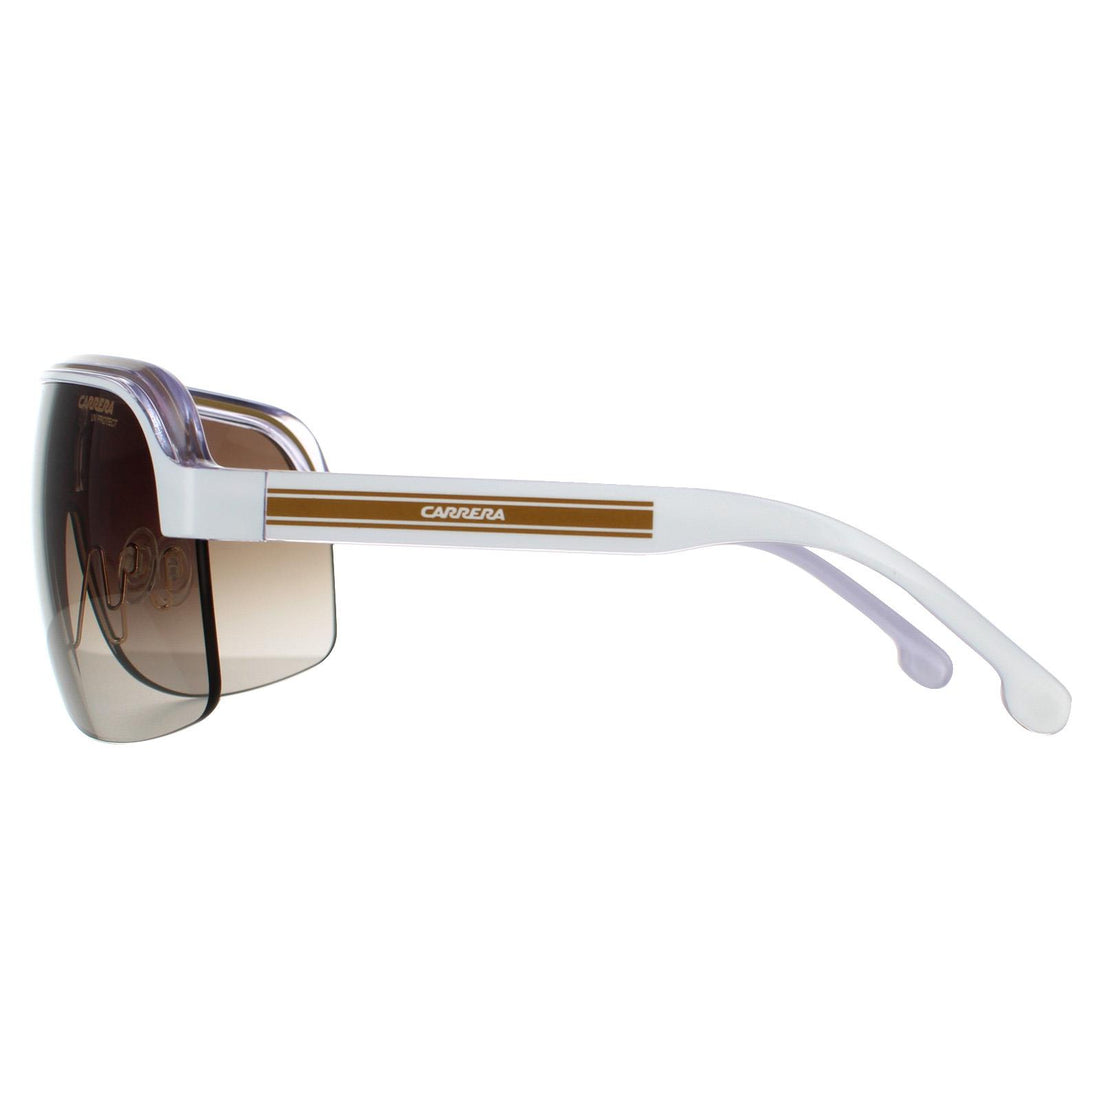 Carrera Sunglasses Topcar 1/N P9U HA White Crystal Brown Gradient